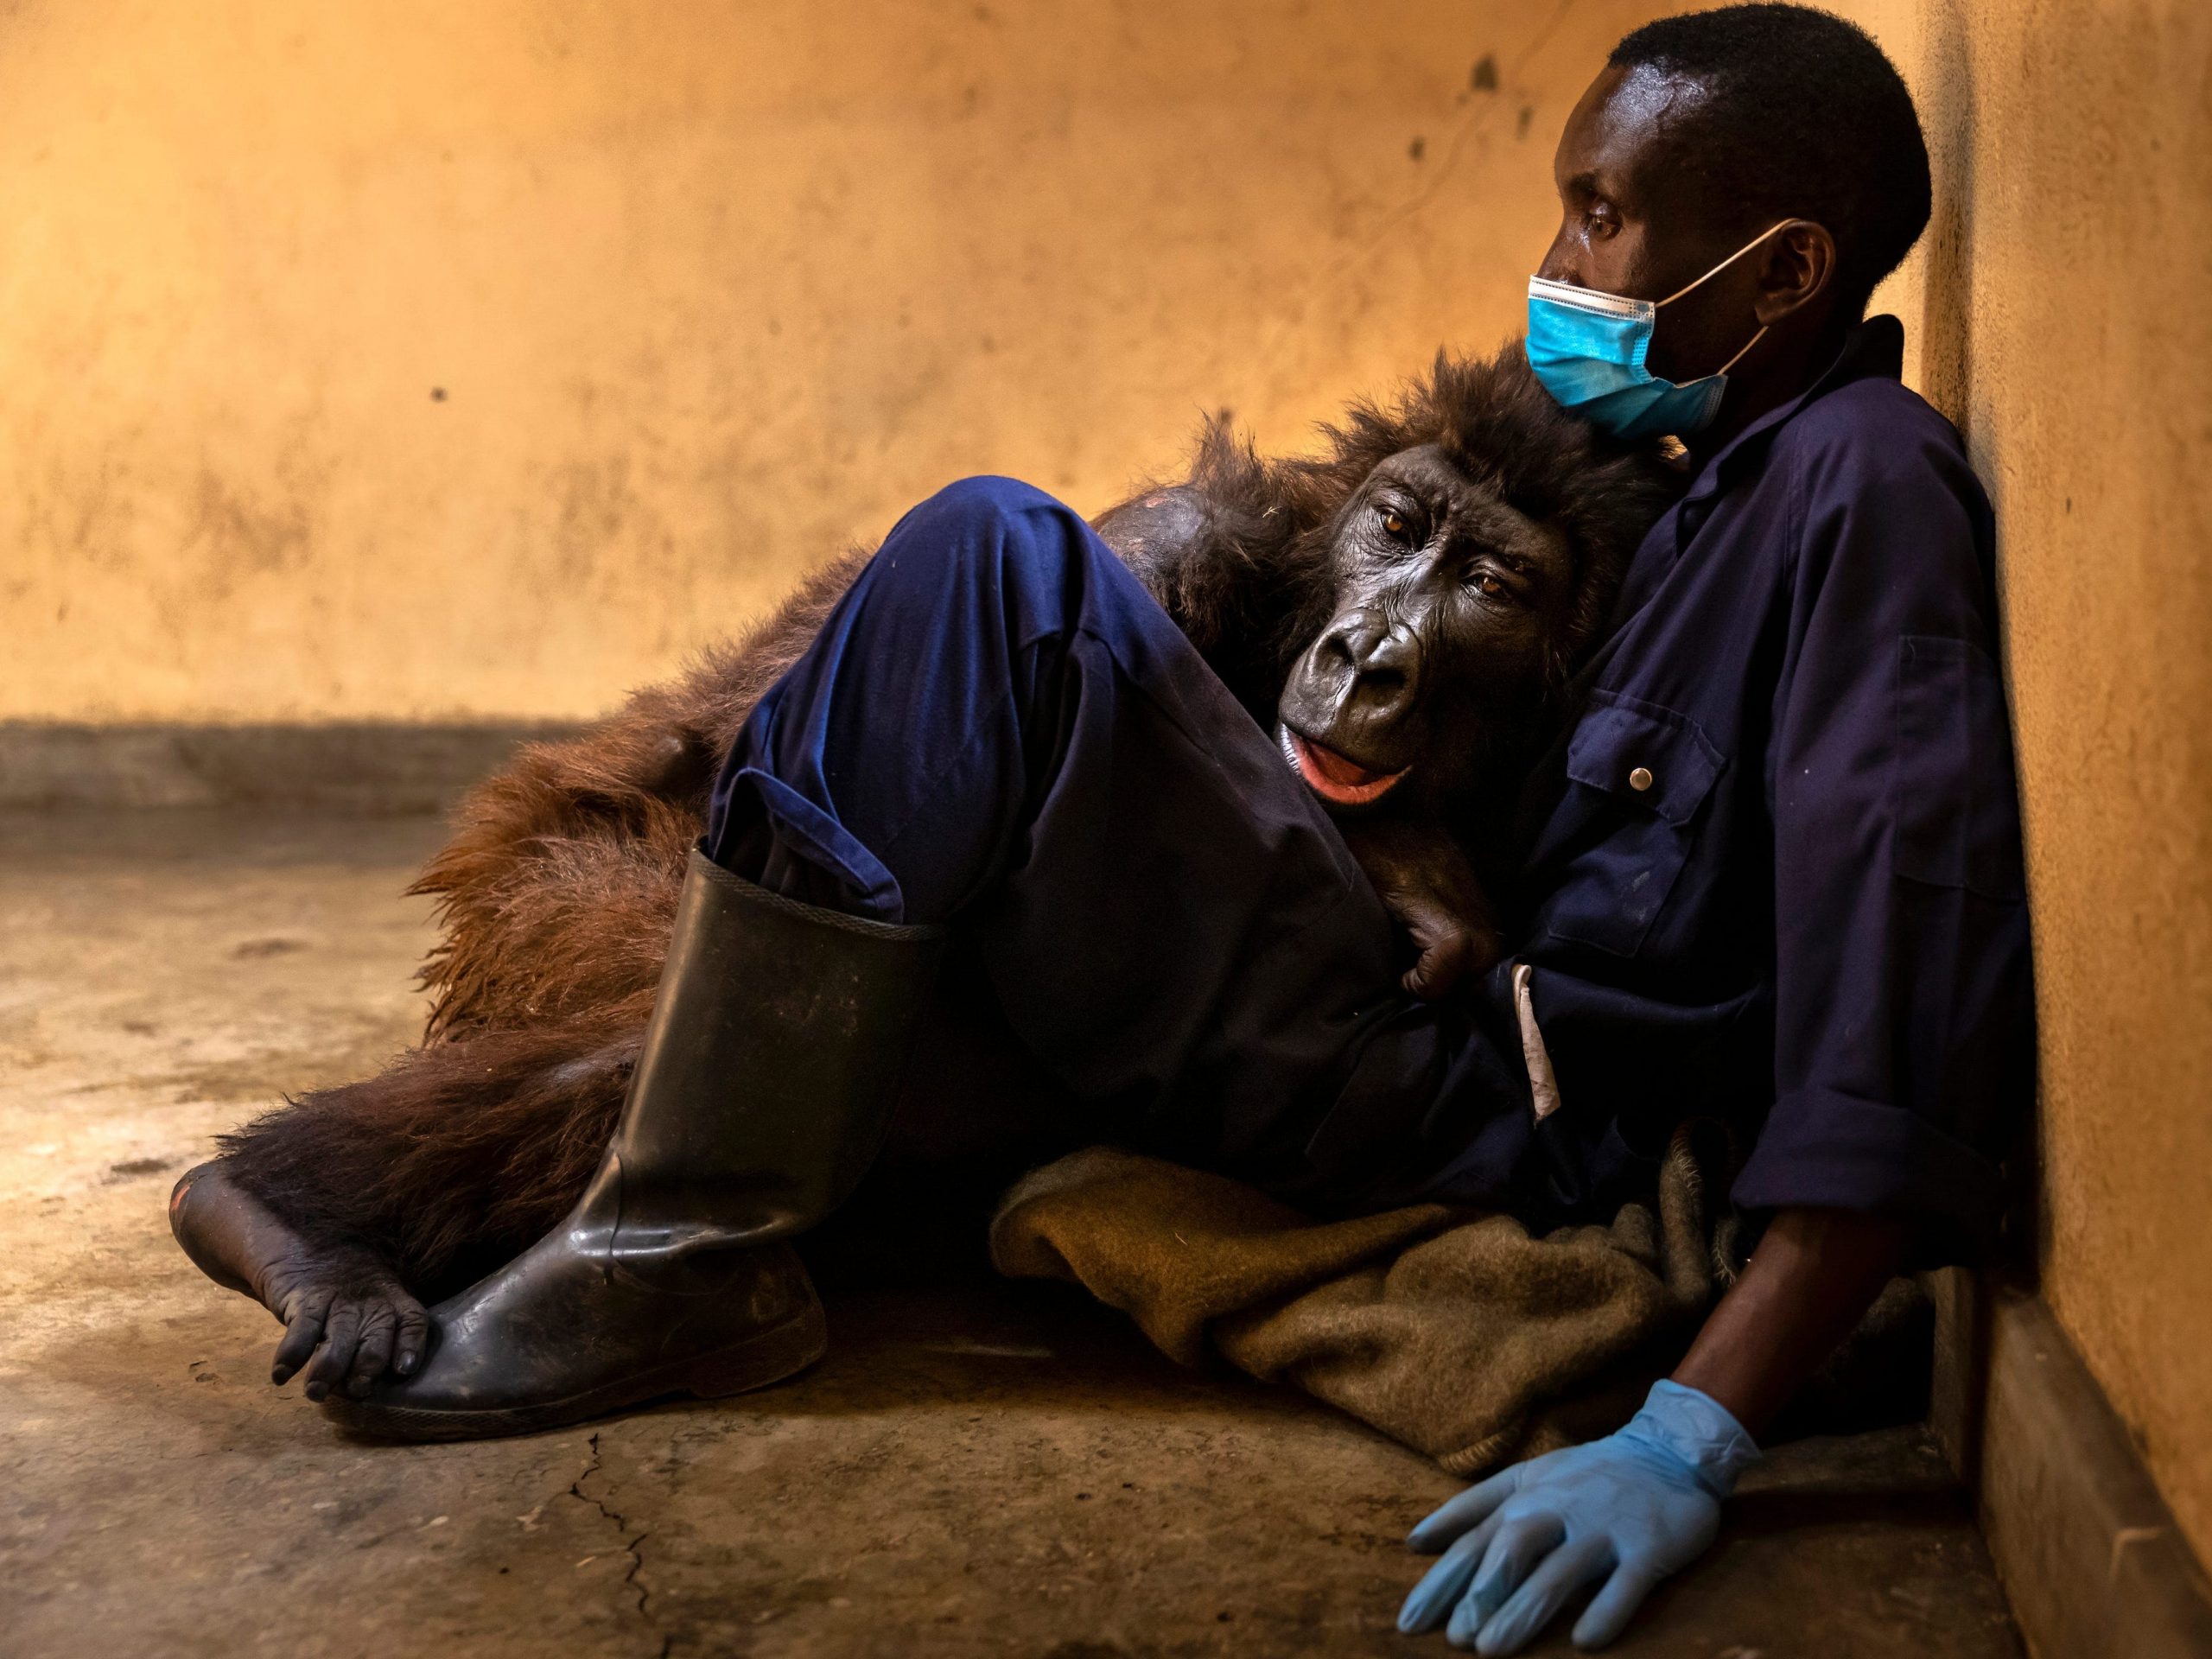 Mountain gorilla, Ndakasi, lies in Andre Bauma's arms on the ground.